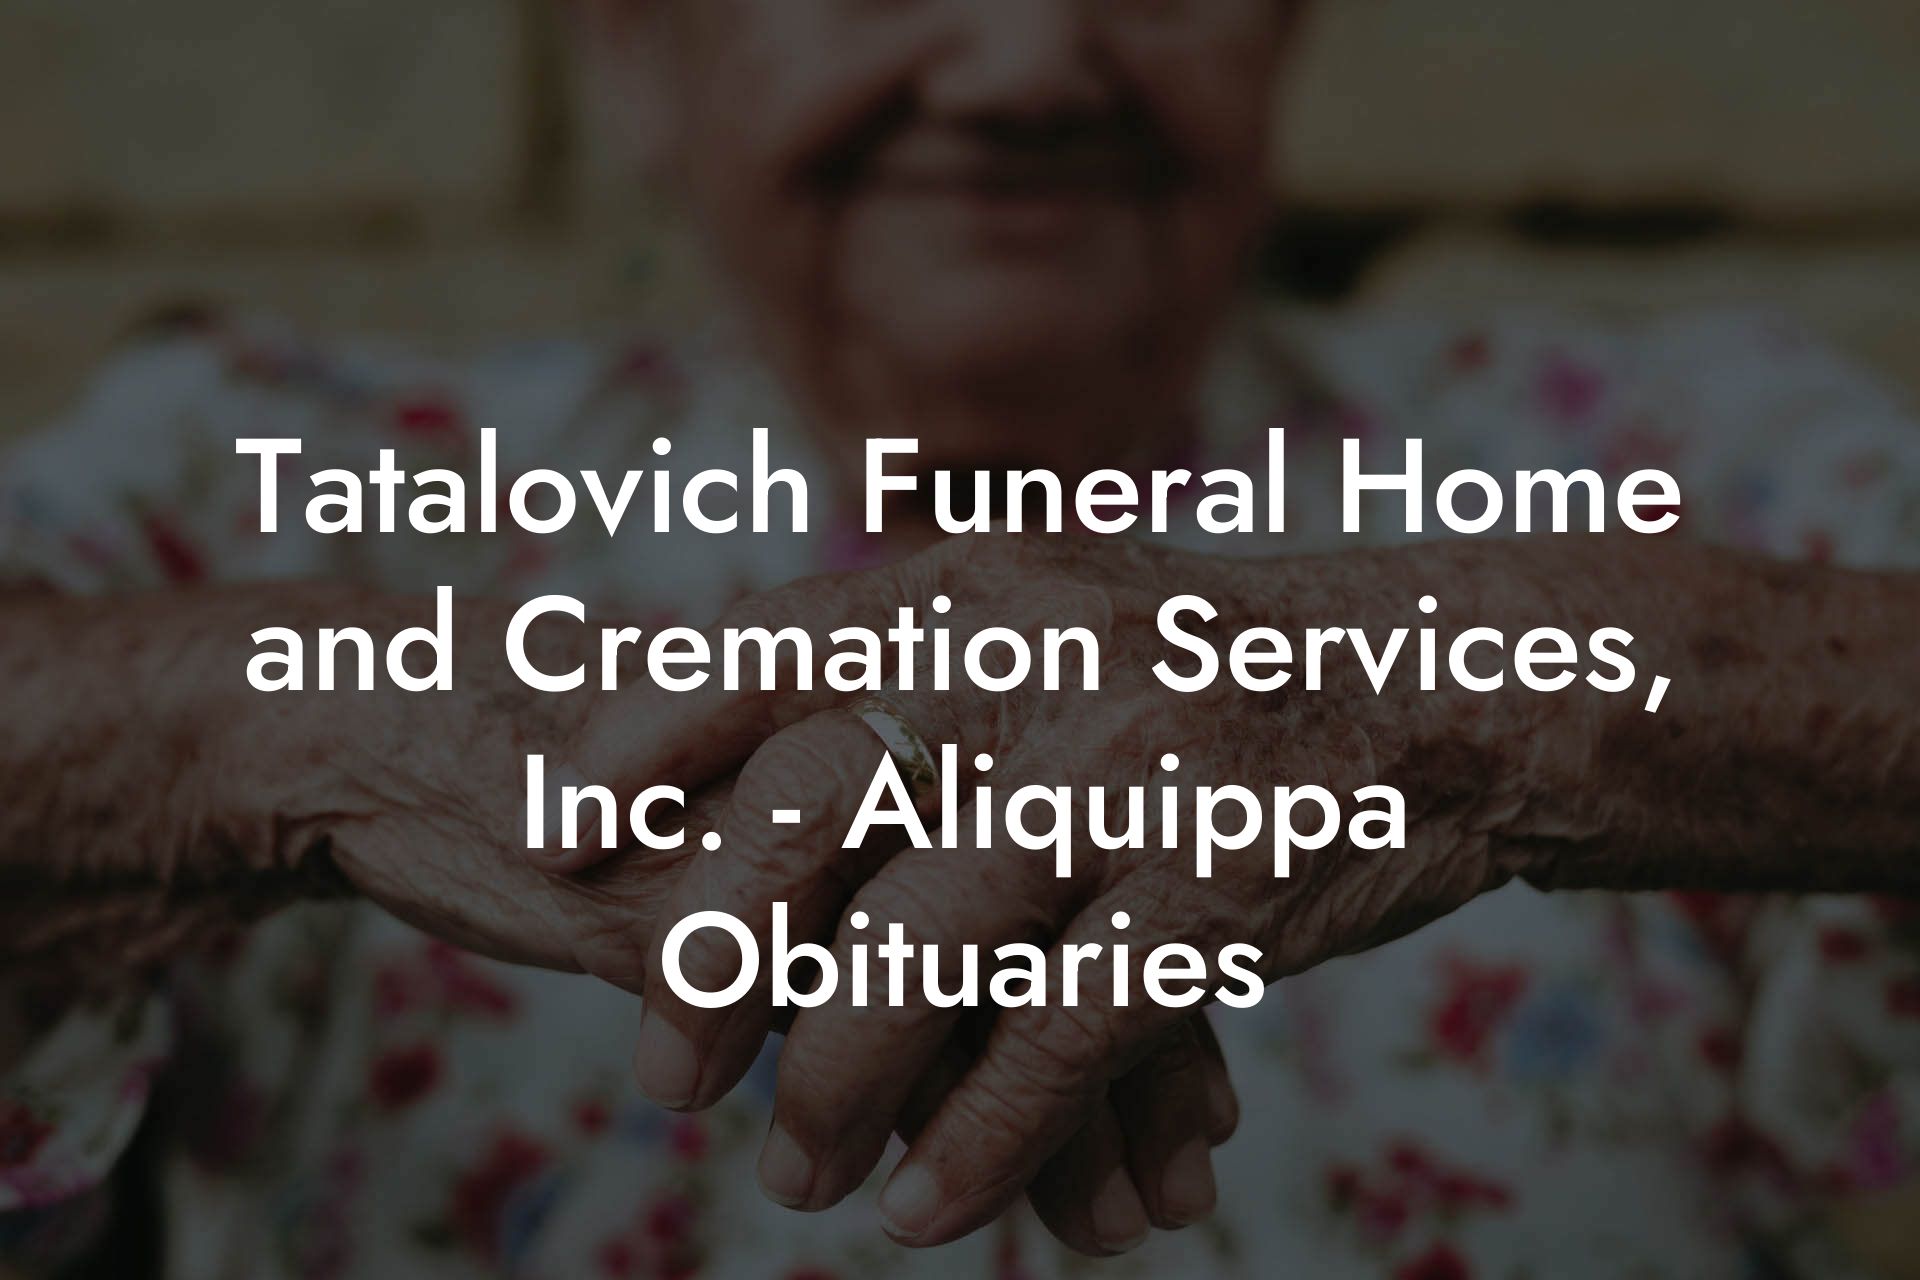 Tatalovich Funeral Home and Cremation Services, Inc. - Aliquippa Obituaries